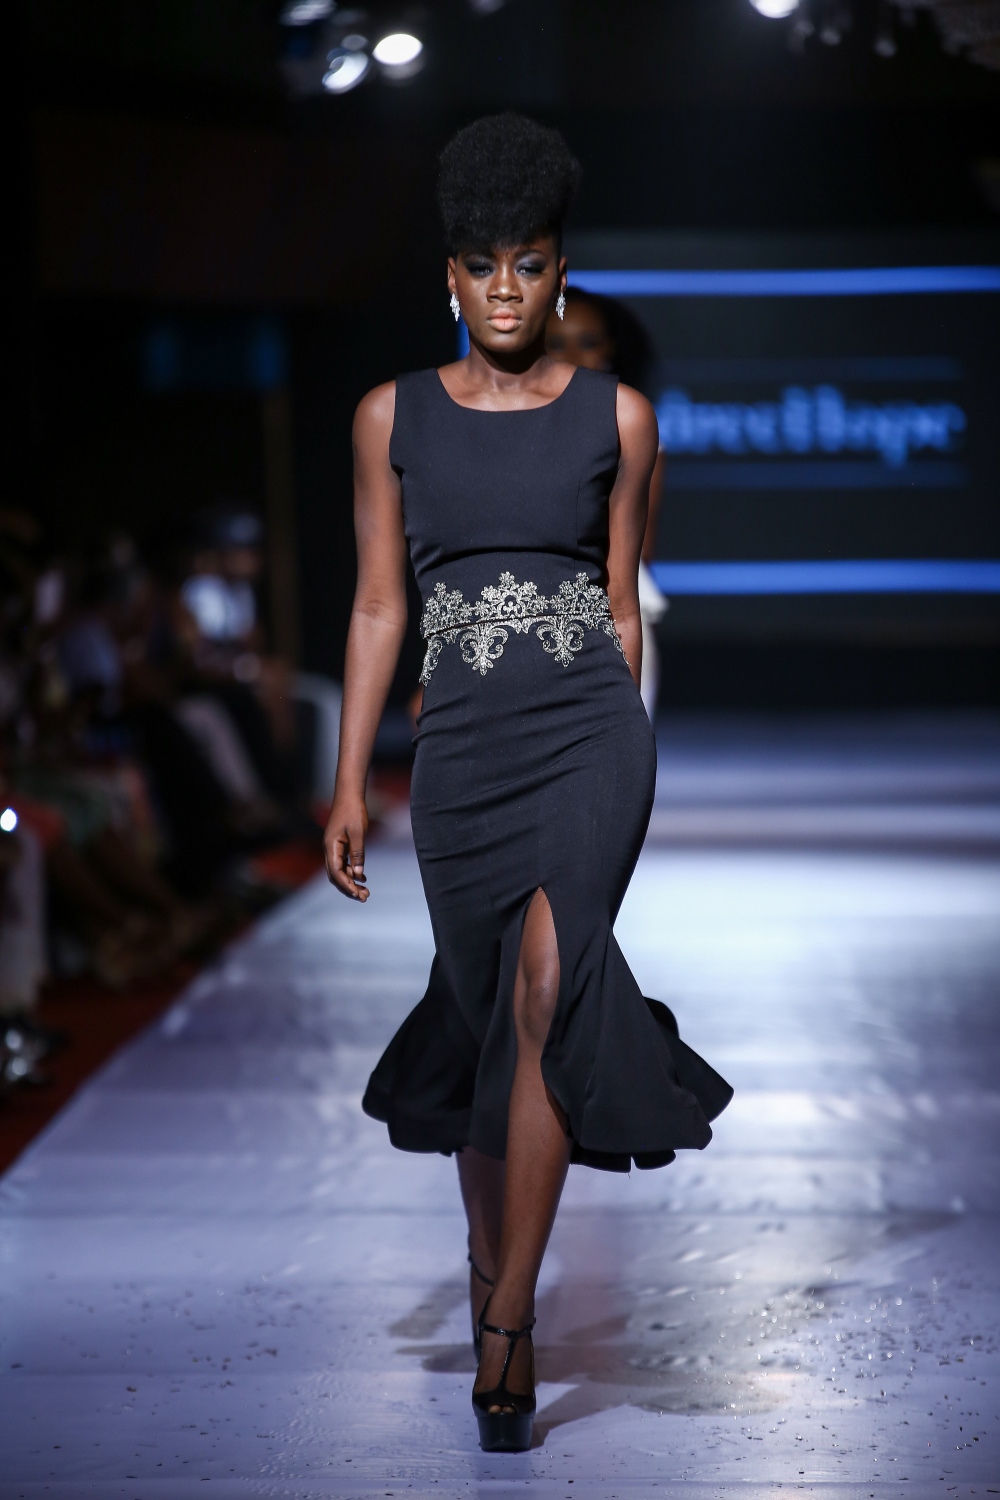 #AFWN17 | Africa Fashion Week Nigeria DAY 2: Audree Hope